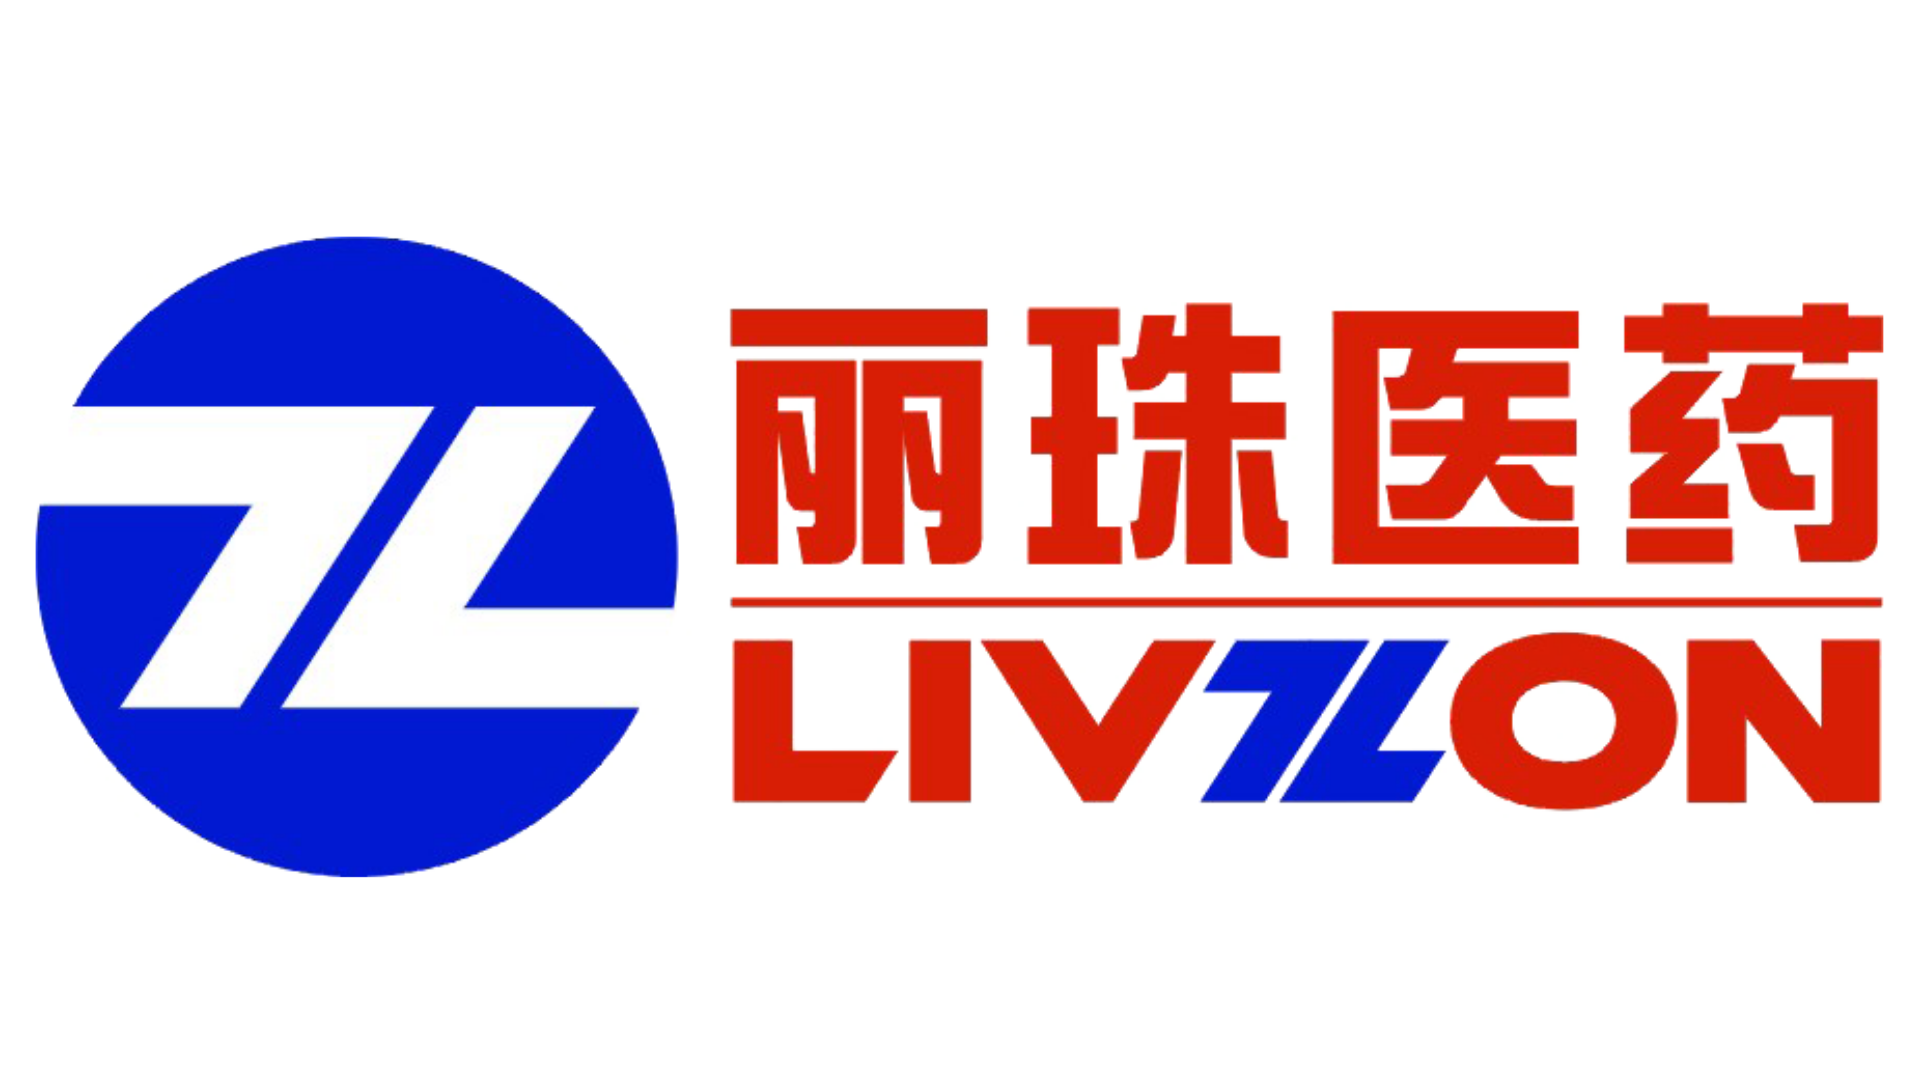 New cooperation partner: Livzon Pharmaceutical Group Inc